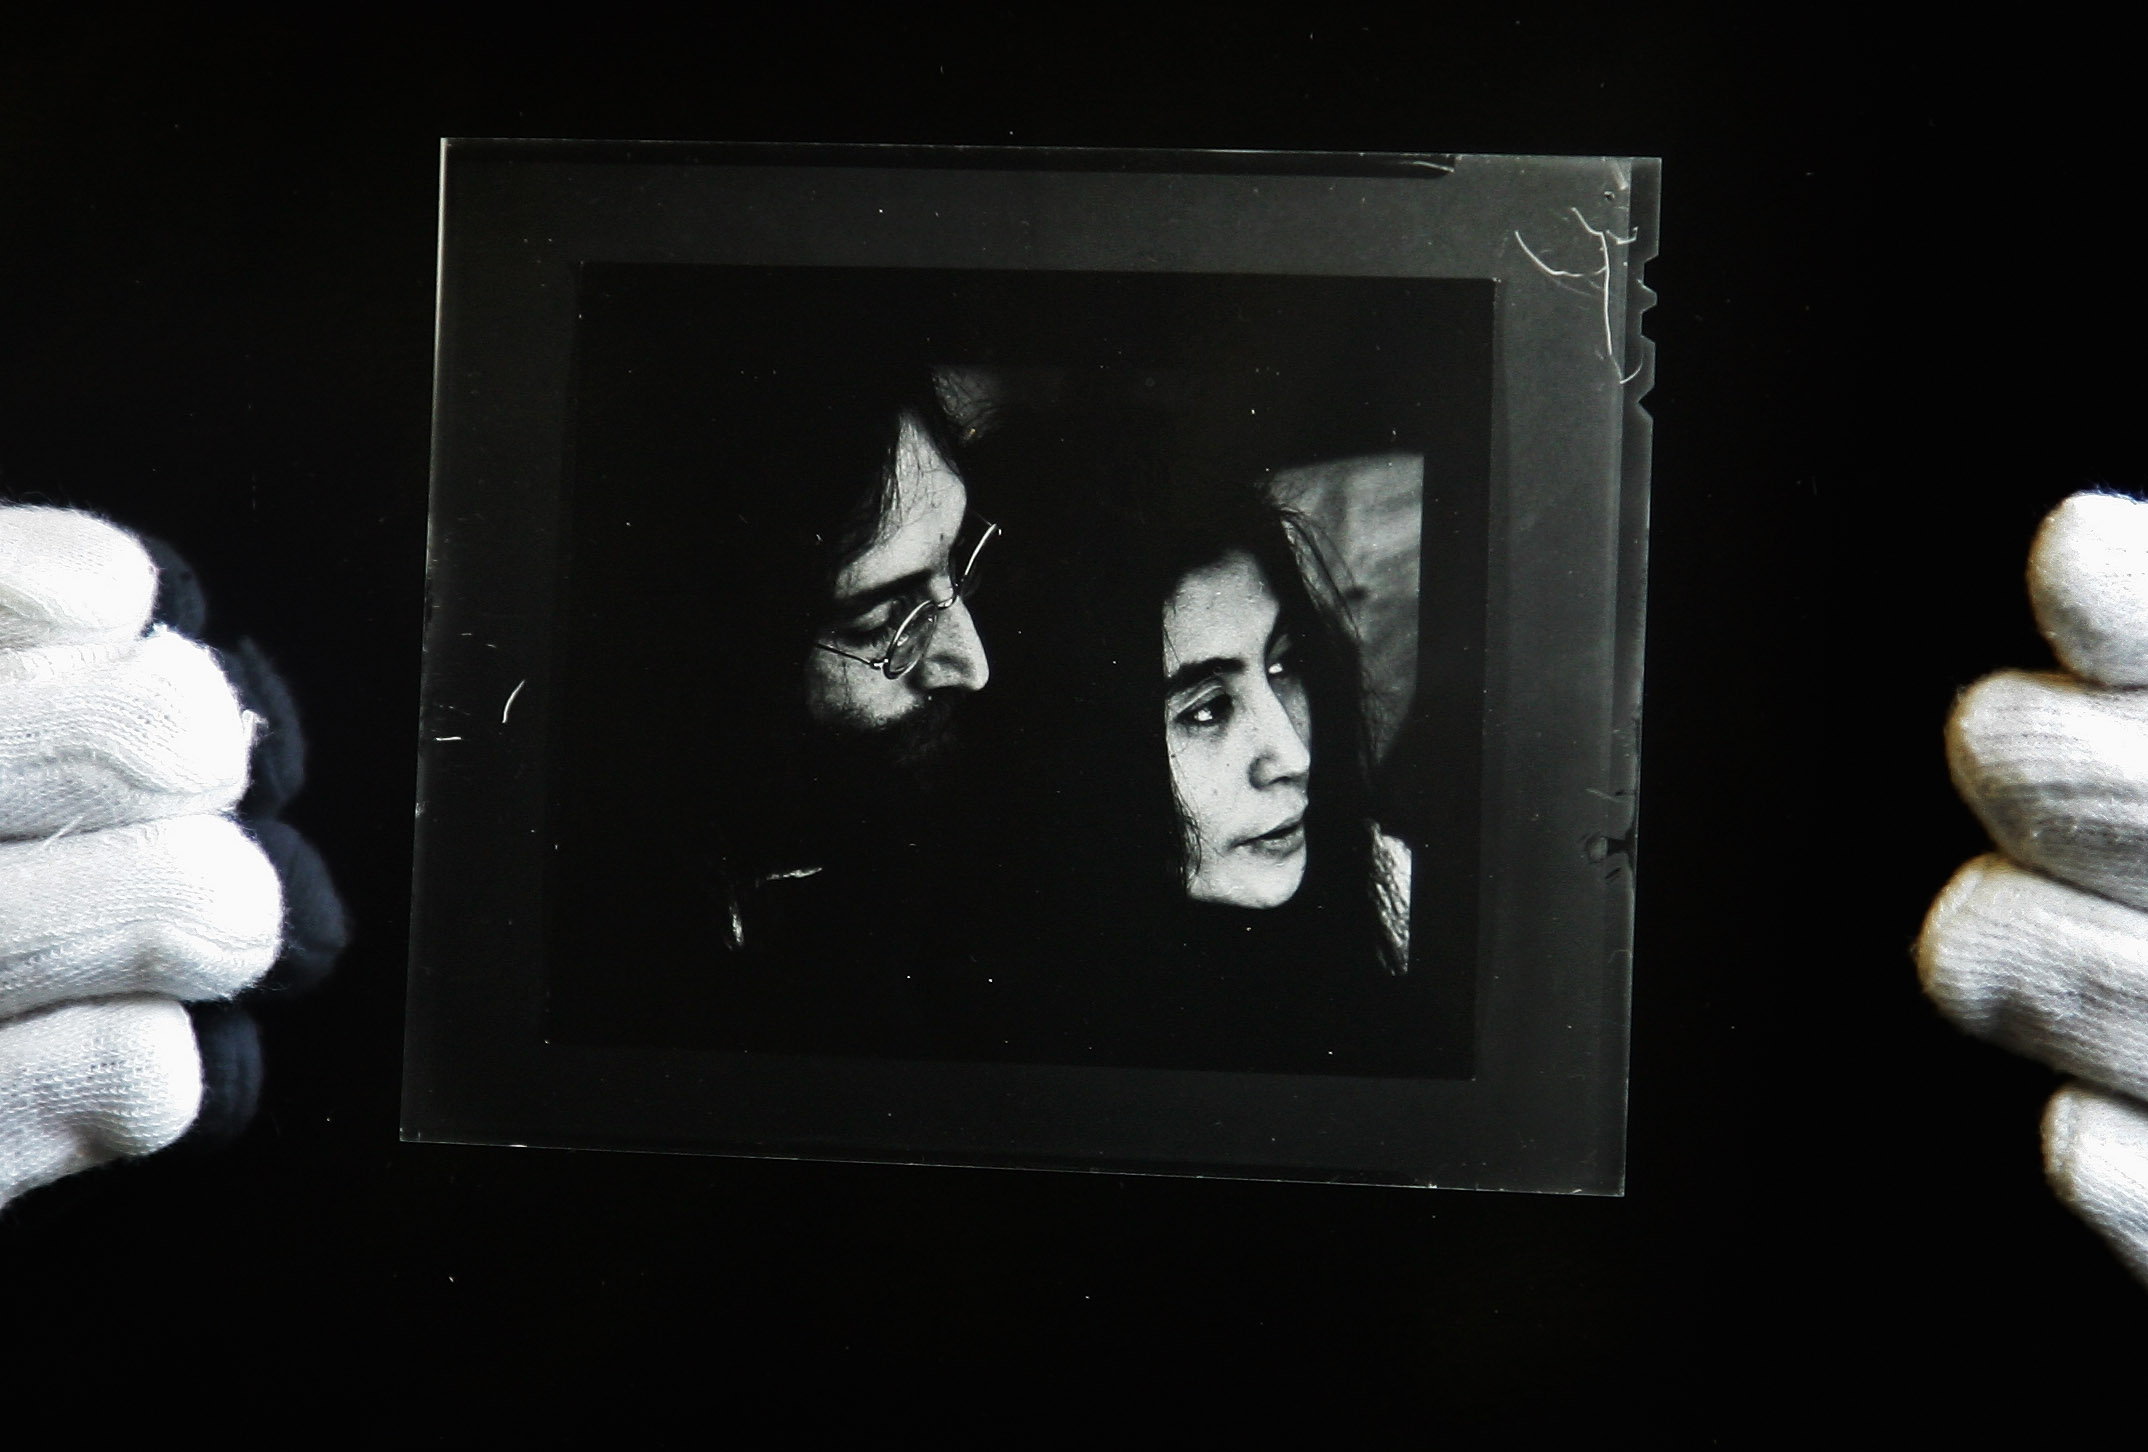 Il leggendario ‘Wedding Album’ di John Lennon e Yoko Ono sarà ripubblicato